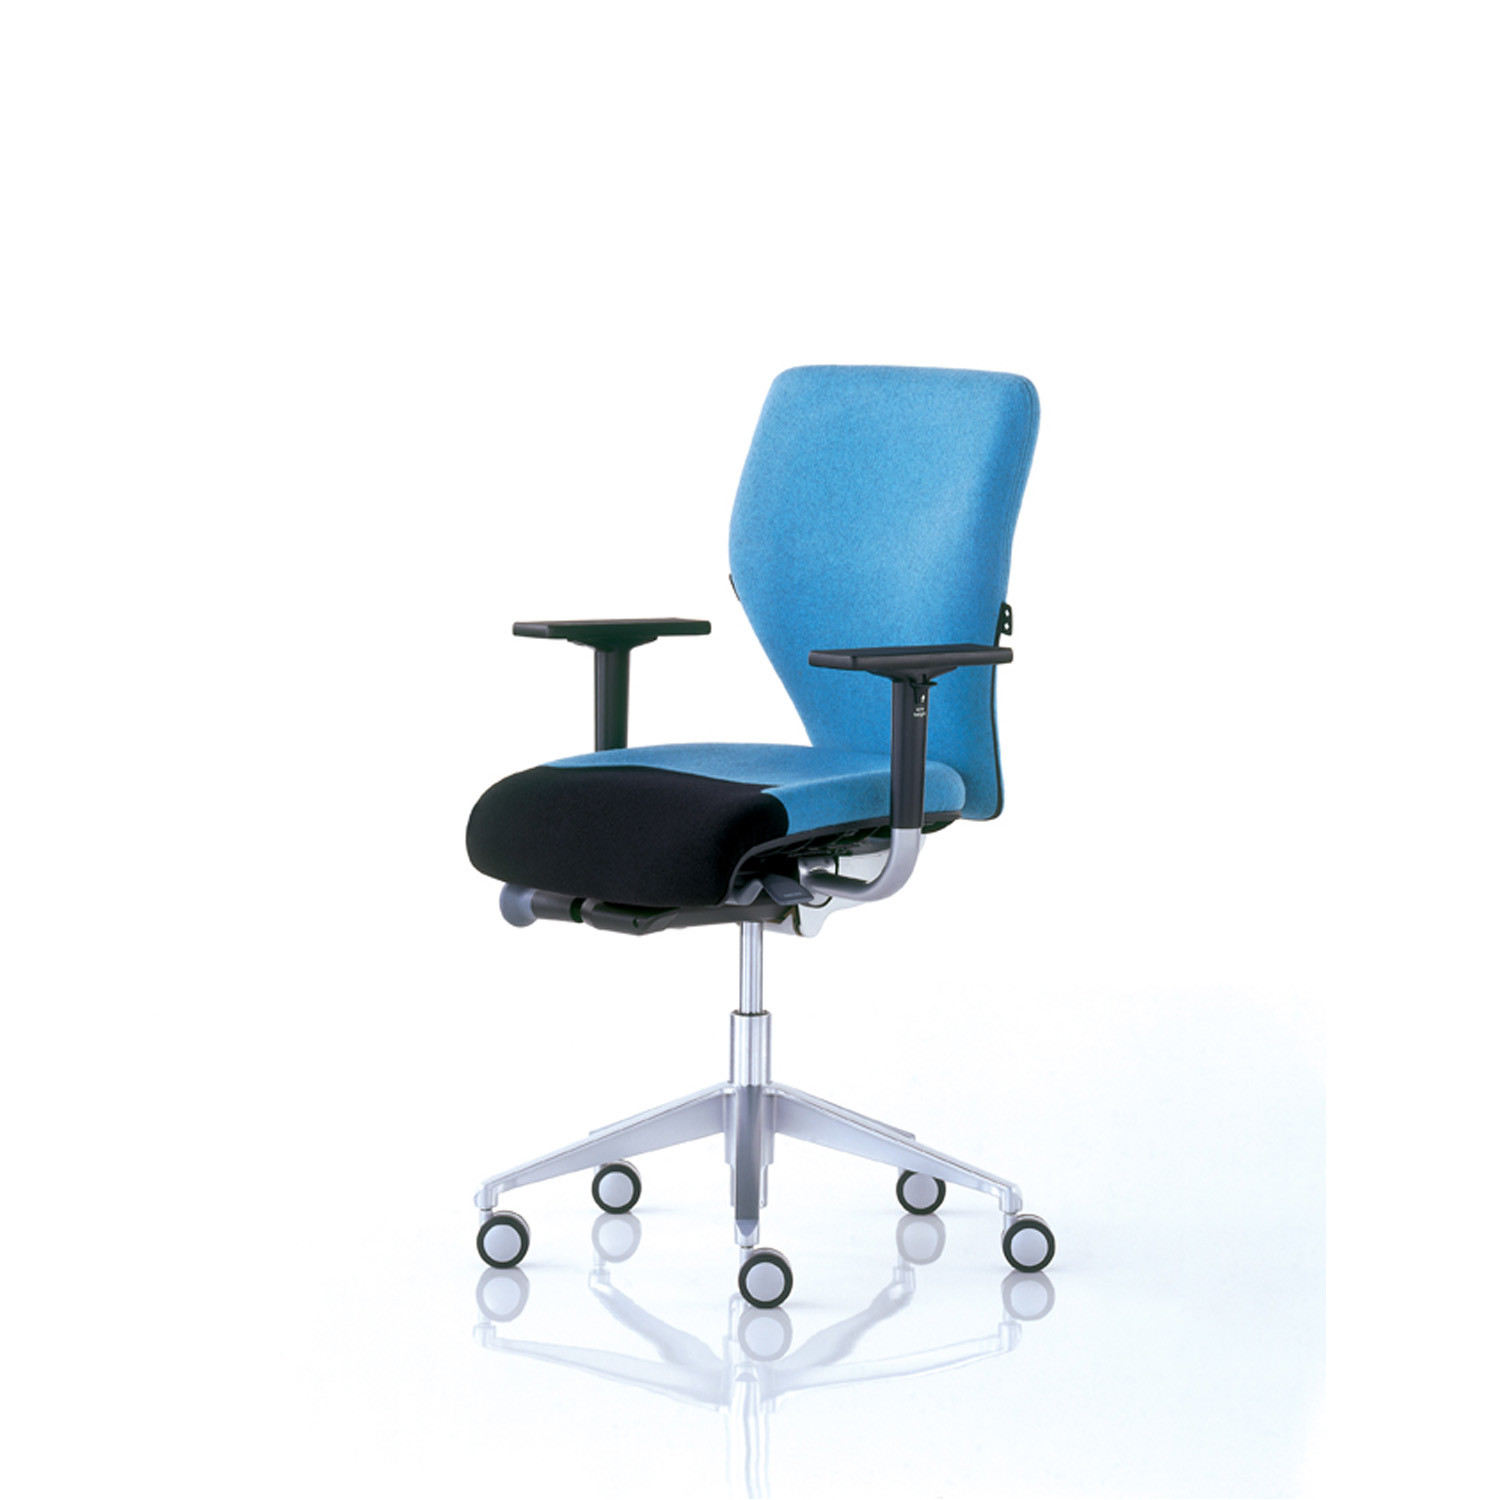 Orangebox X10 Office Chair